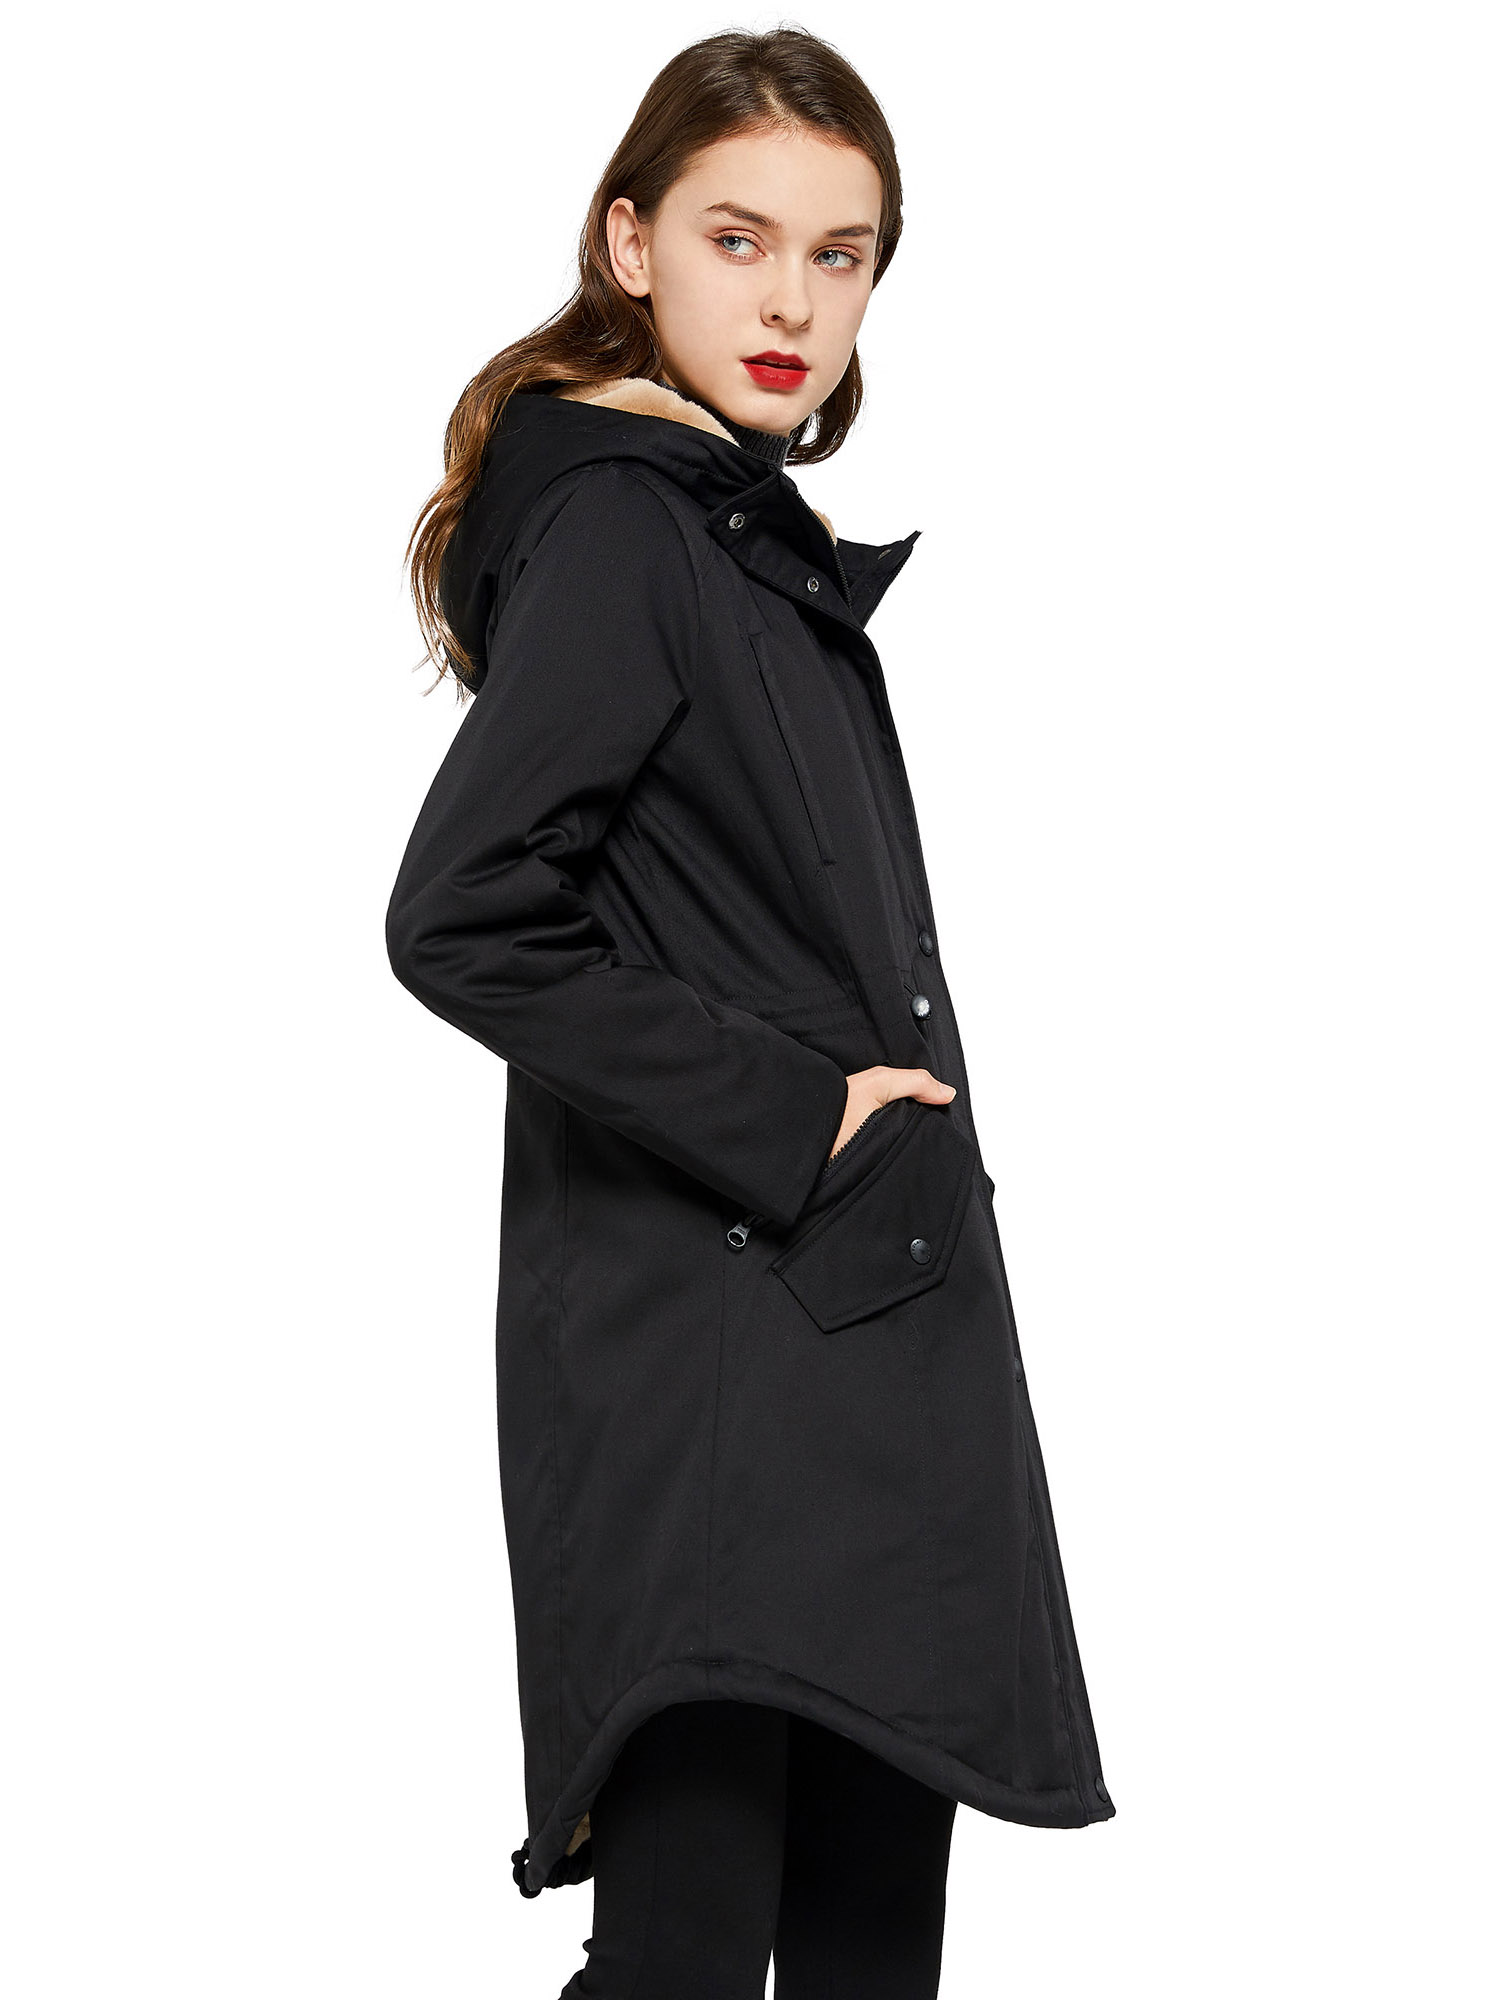 Orolay Women's Winter Parka Fleece Parka Warm Winter Coat Hoodie Jacket Mid length Winter Jacket Black XL - image 3 of 5